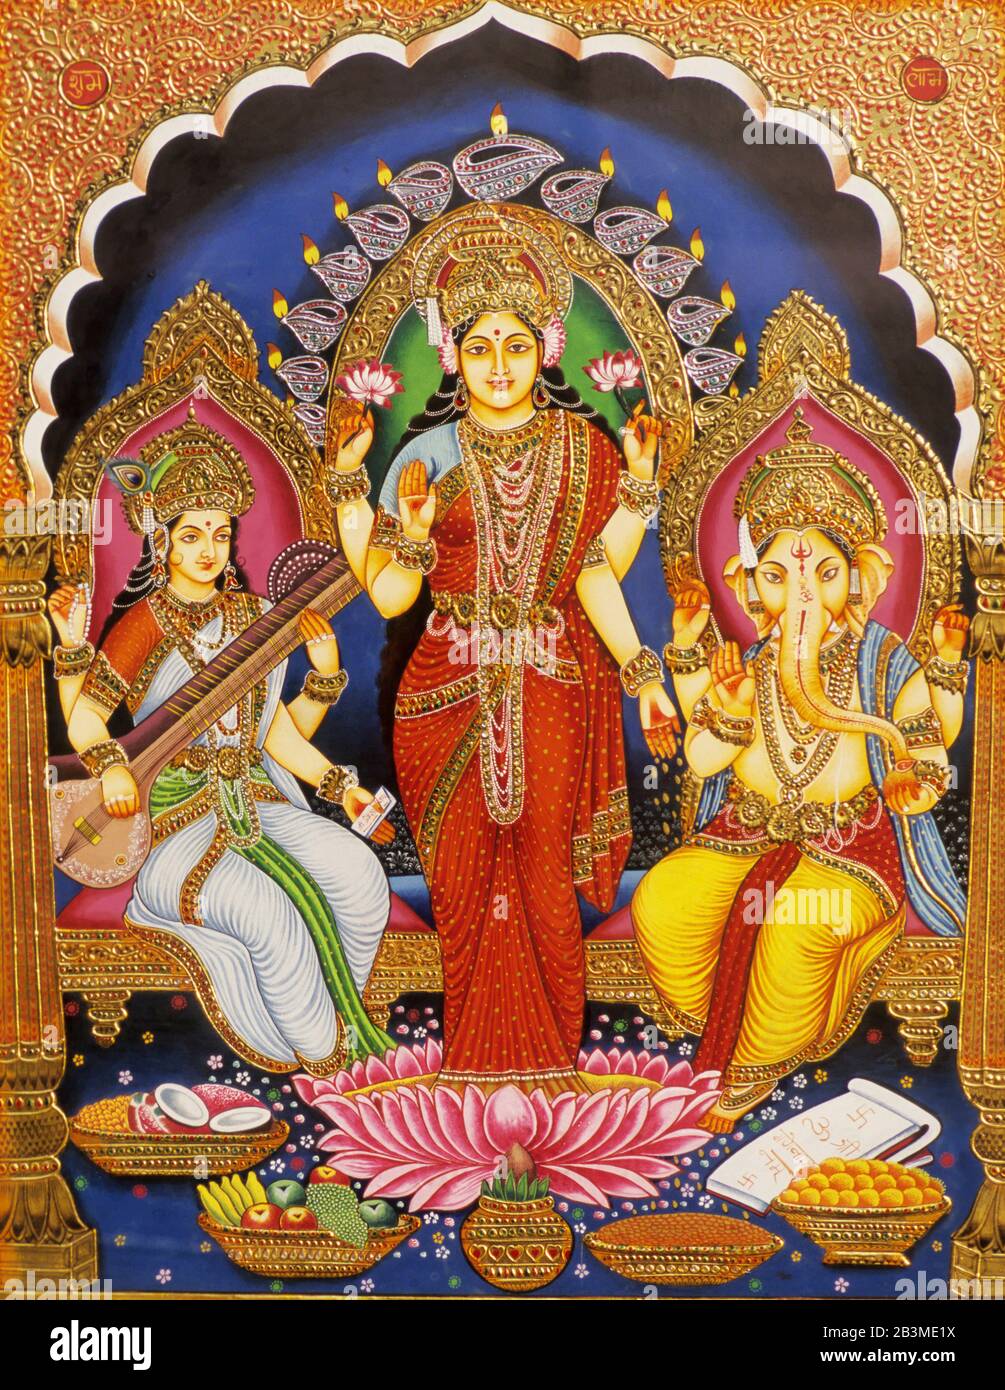 Lakshmi ganesh saraswati hi-res stock photography and images - Alamy